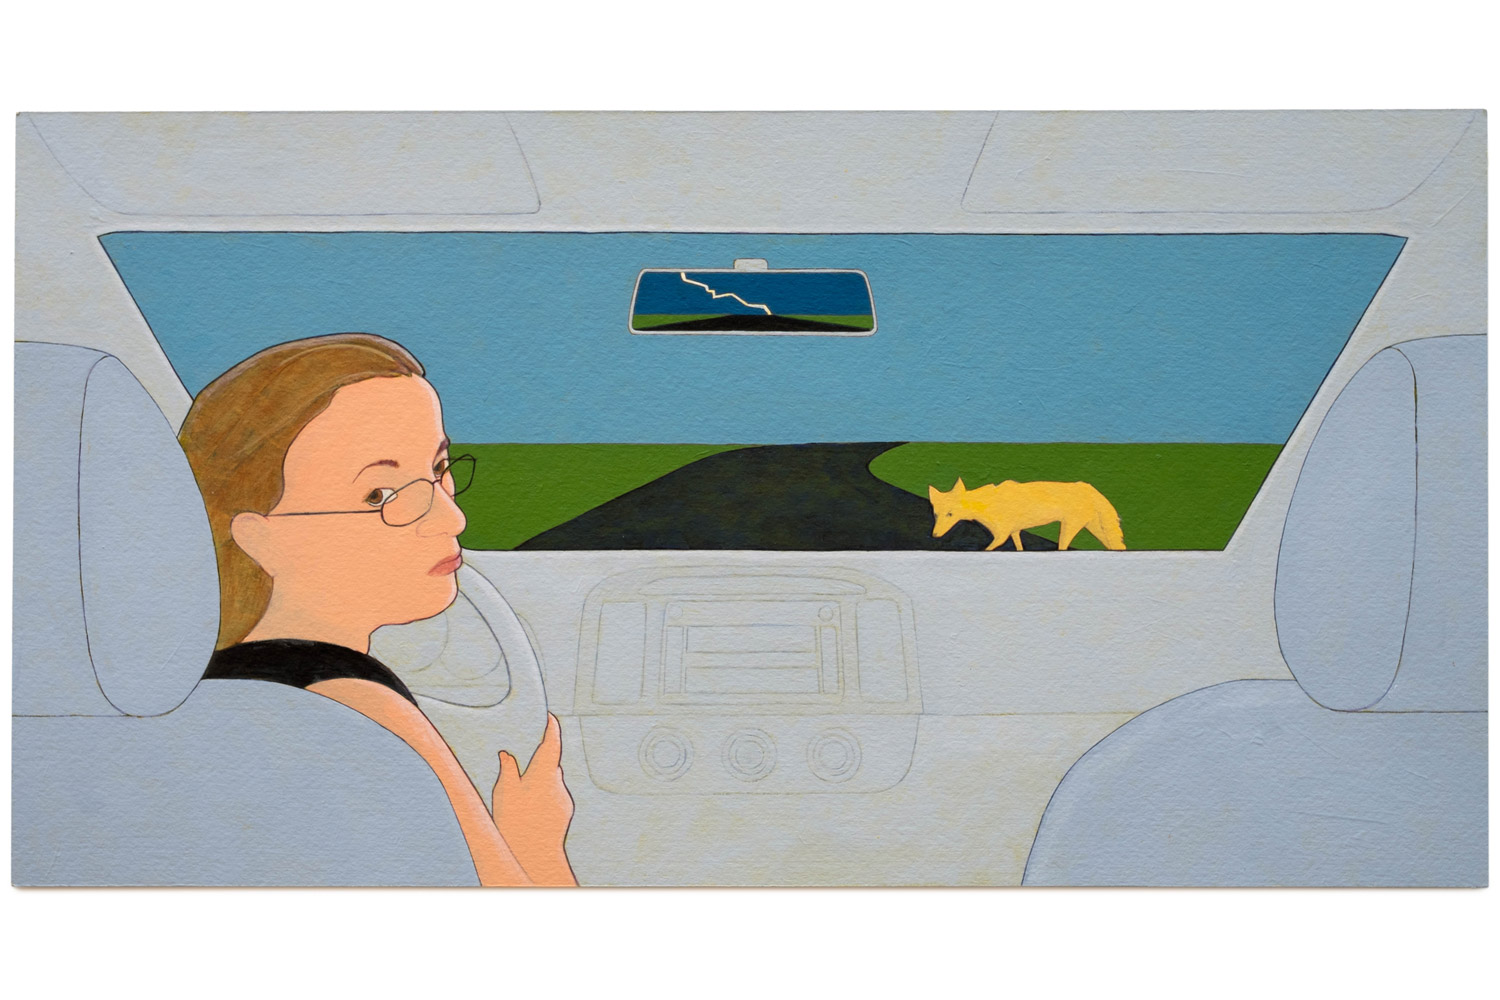   Denial (coyote crossing),  2014 Self-portrait,&nbsp;Acrylic on paper, 9.5" x 18" 